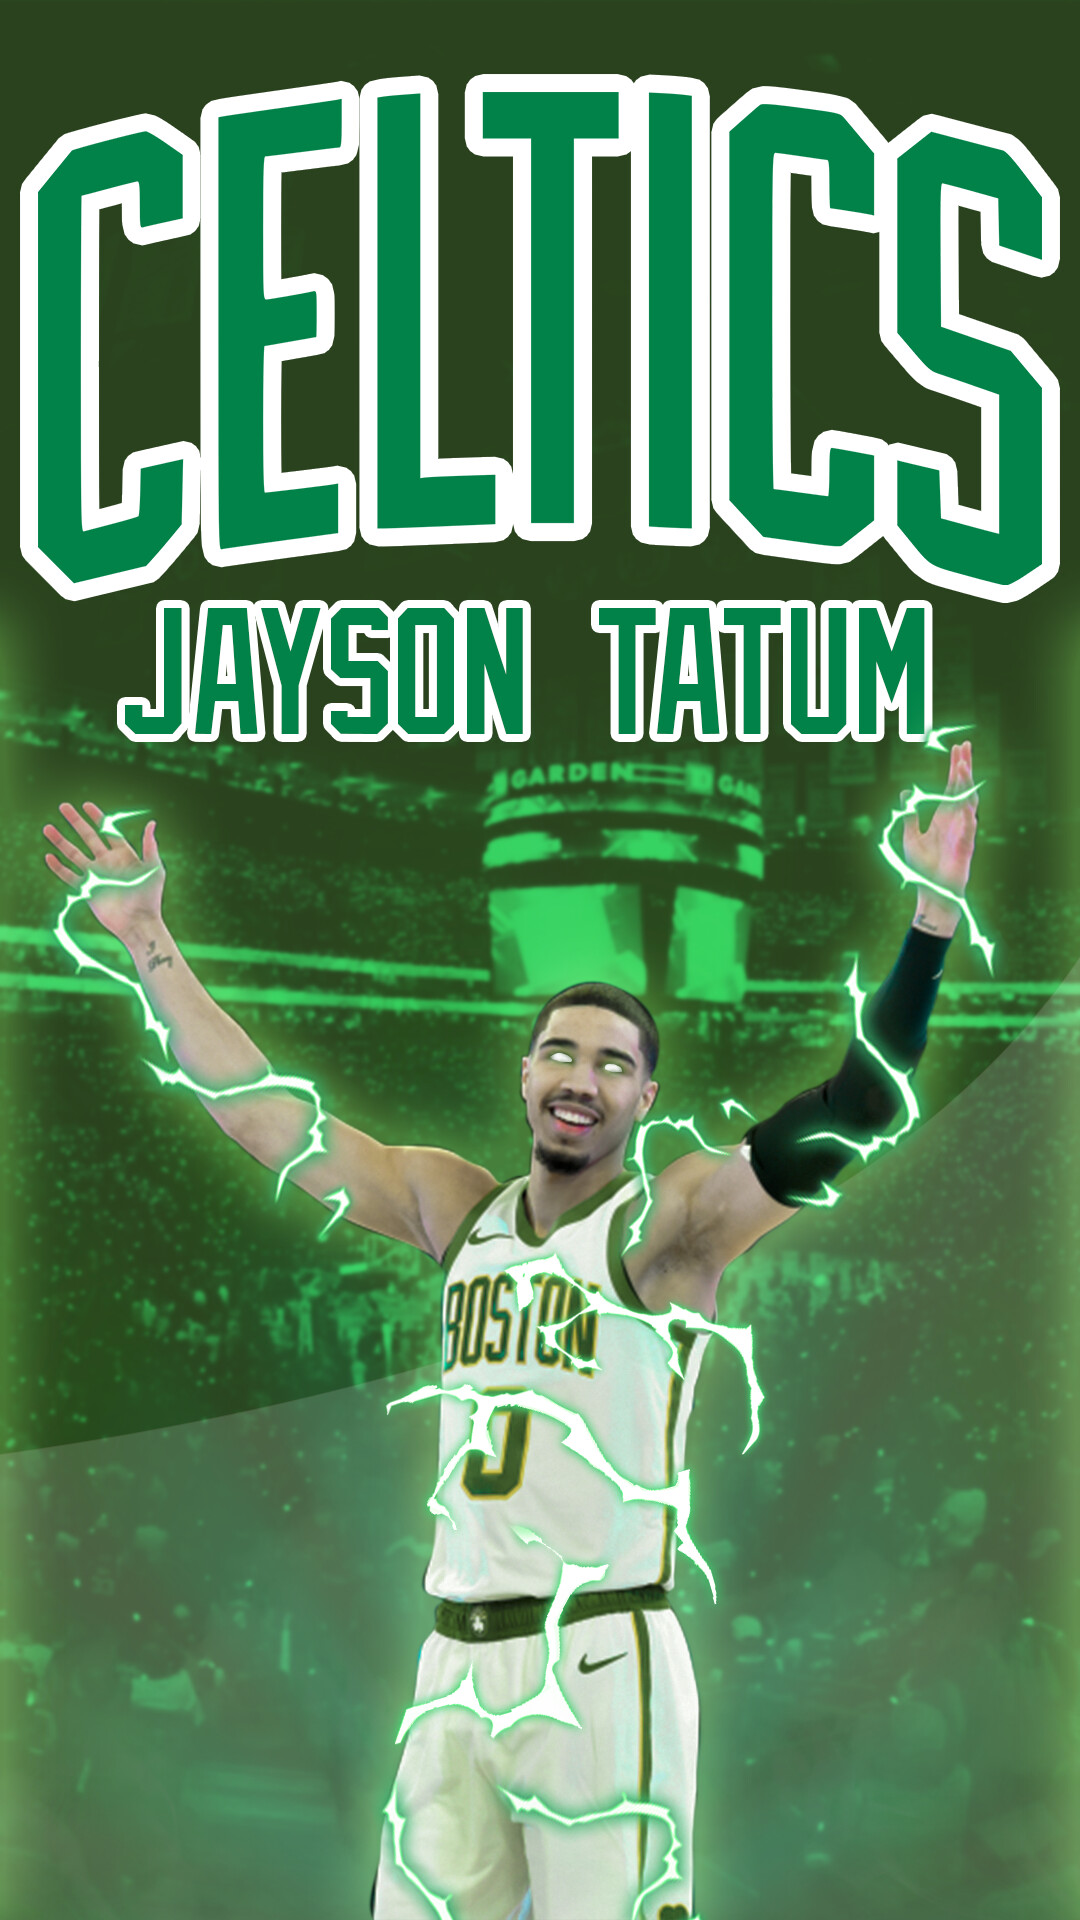 Boston Celtics Wallpaper iPhone Jayson Tatum  Boston celtics wallpaper  Nba wallpapers Jayson tatum